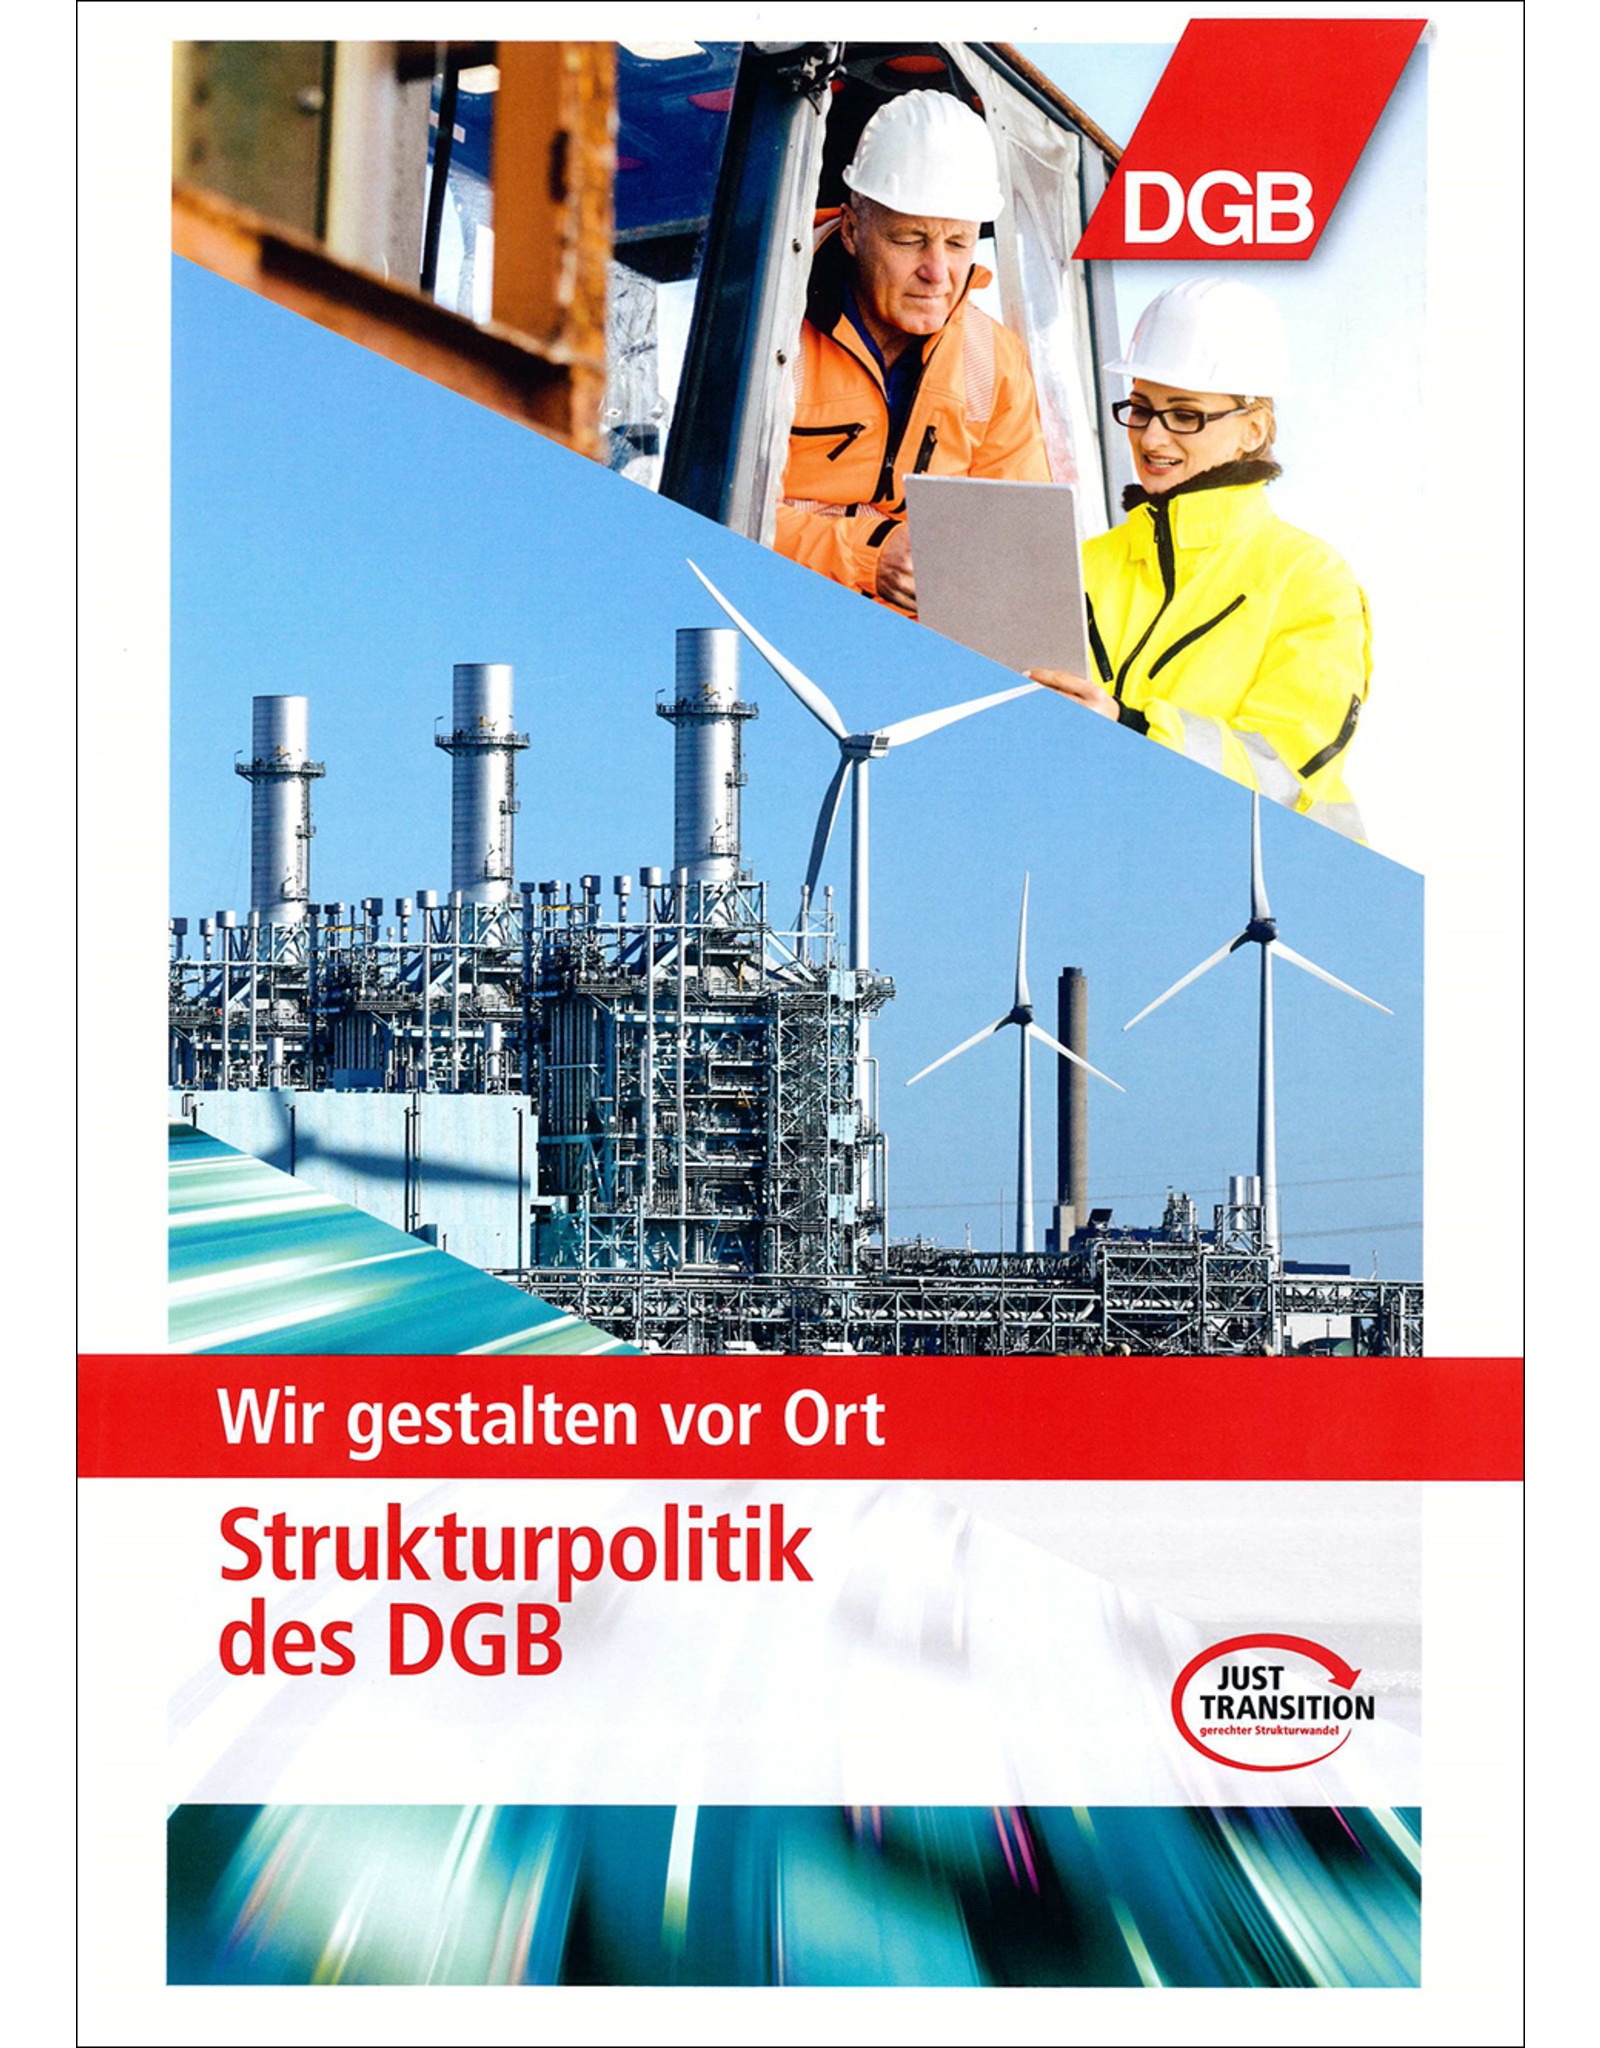 DGB-Broschüre Strukturpolitik des DGB